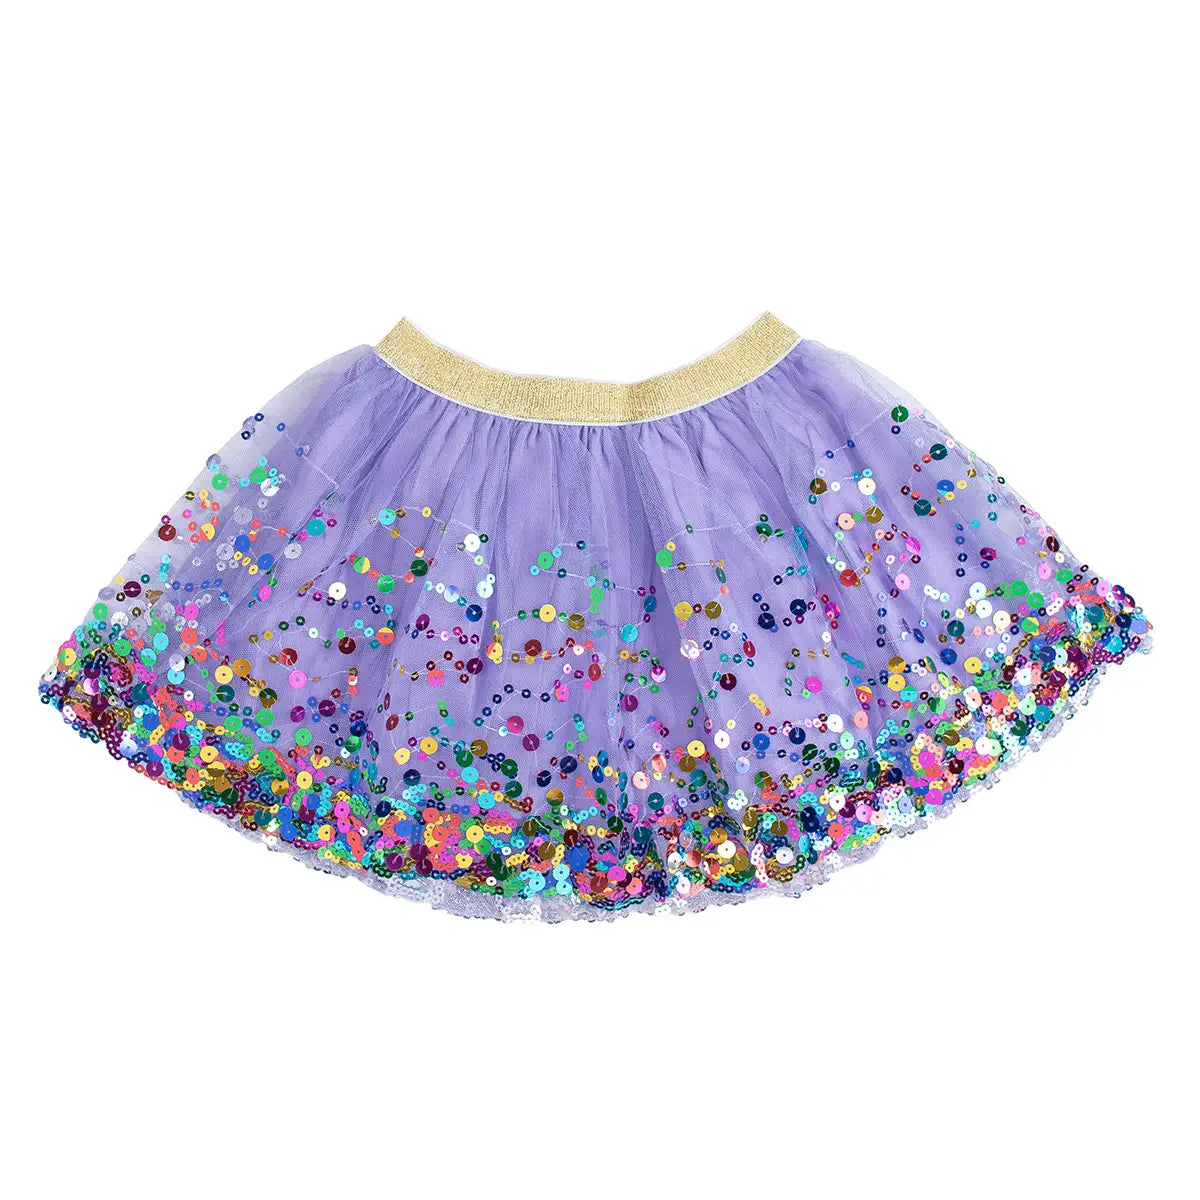 Sweet Wink Lavender Confetti Tulle Skirt